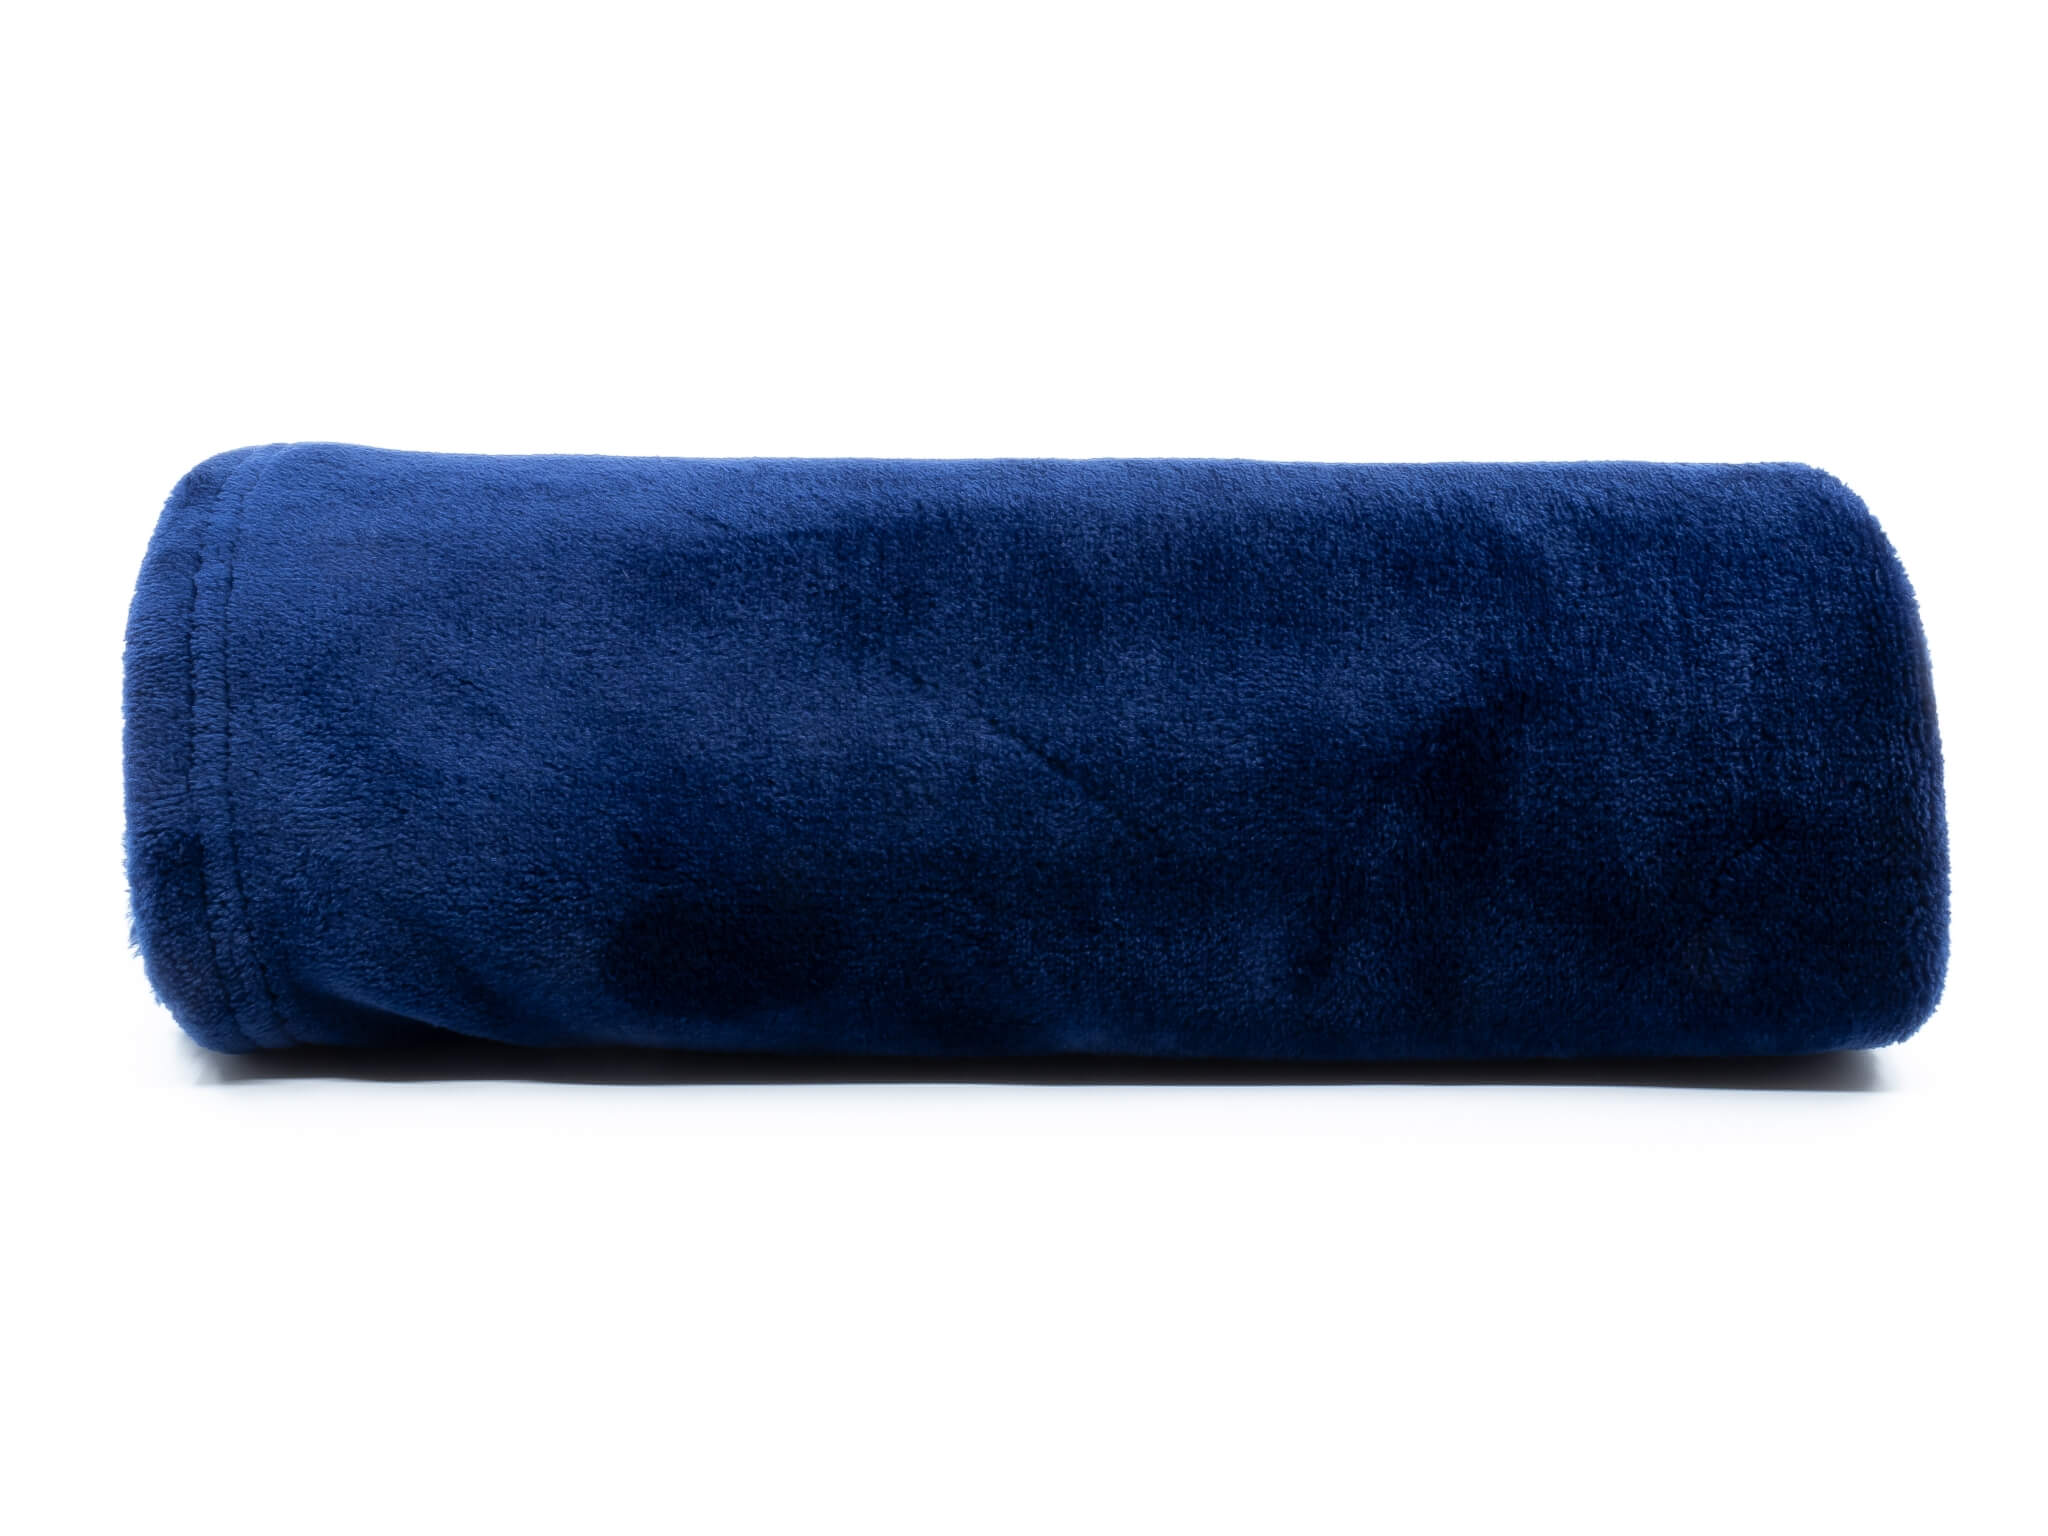 Vsepropejska Ella tmavě modrá deka pro psa Barva: Modrá, Rozměr (cm): 70 x 47